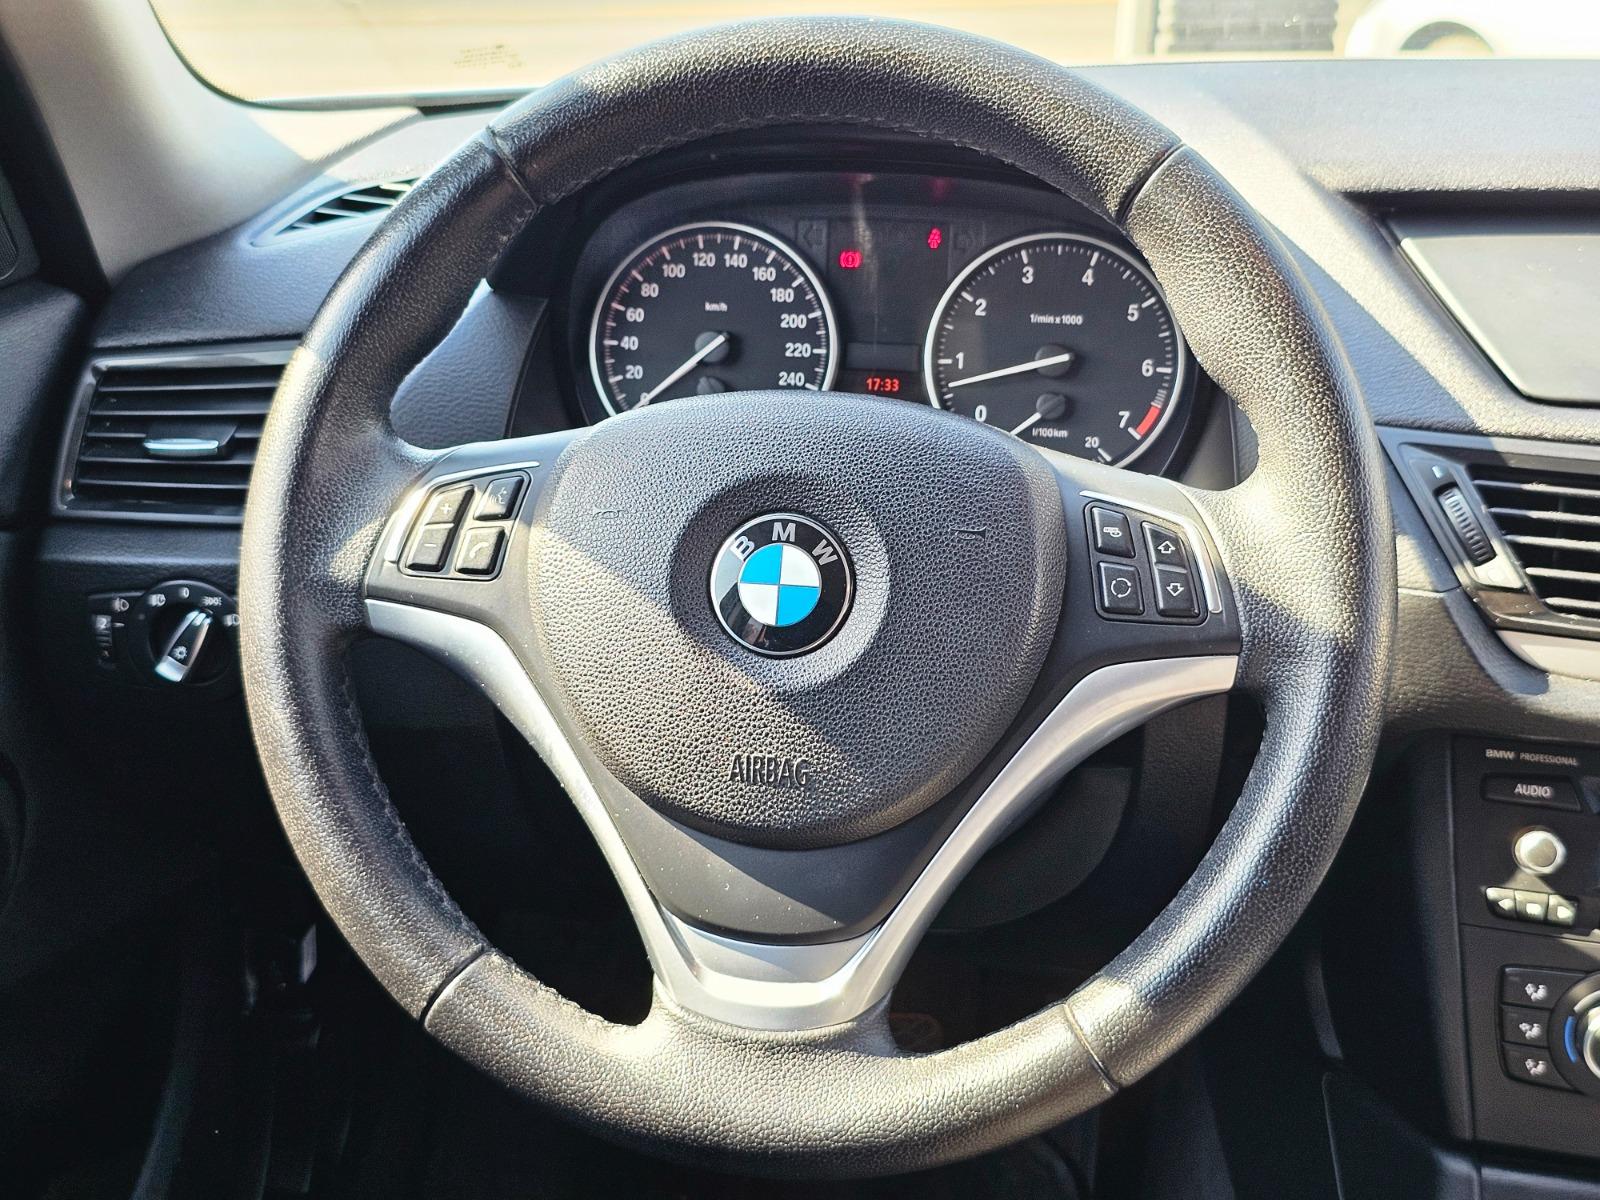 BMW X1 S Drive 18I 2.0 AUT 2013  - FULL MOTOR